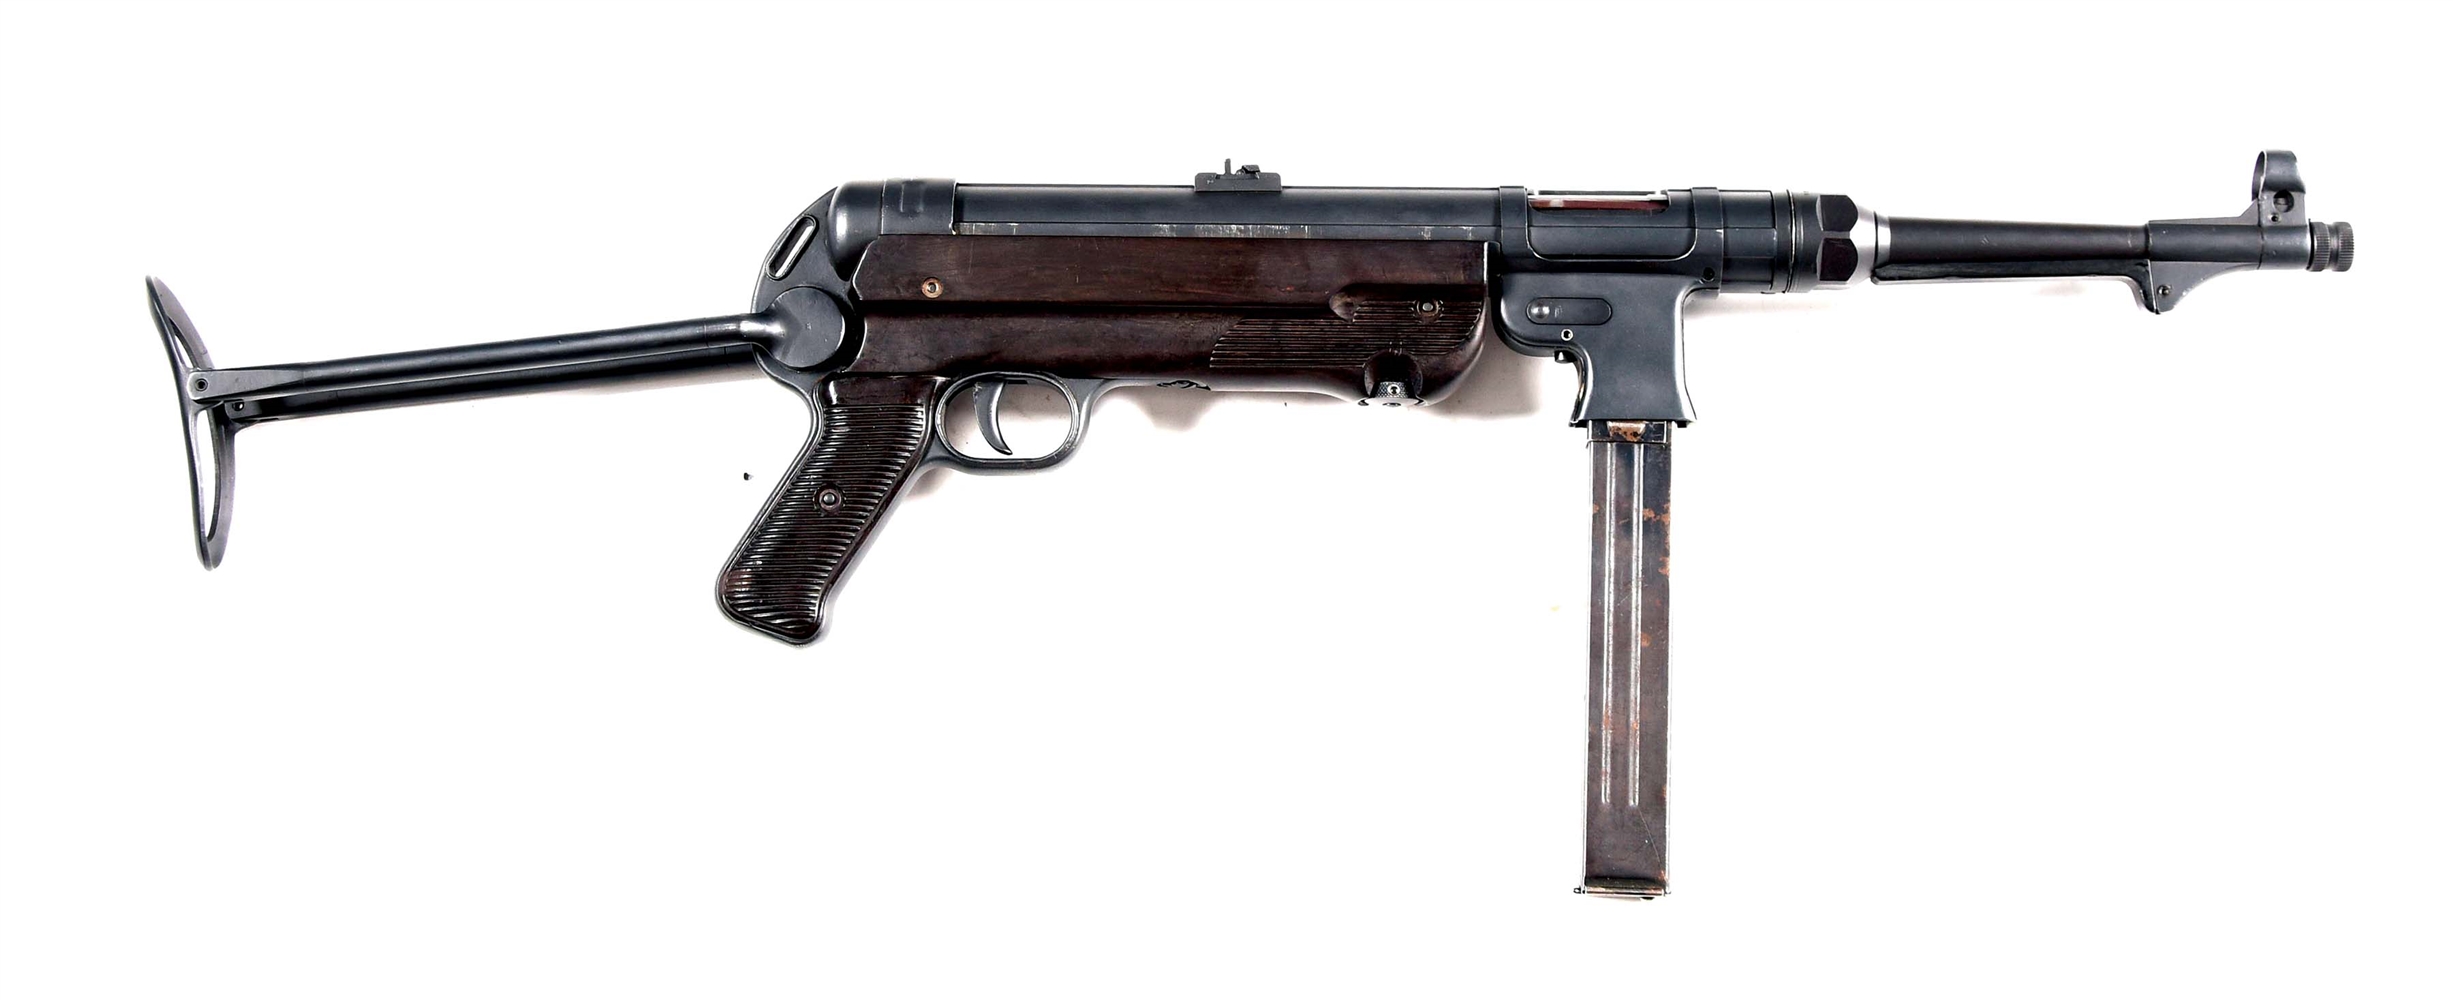 (N) WILSON REGISTERED TUBE TRANSITIONAL FLAT MAG HOUSING GERMAN WORLD WAR II MP-40 MACHINE GUN (FULLY TRANSFERABLE).